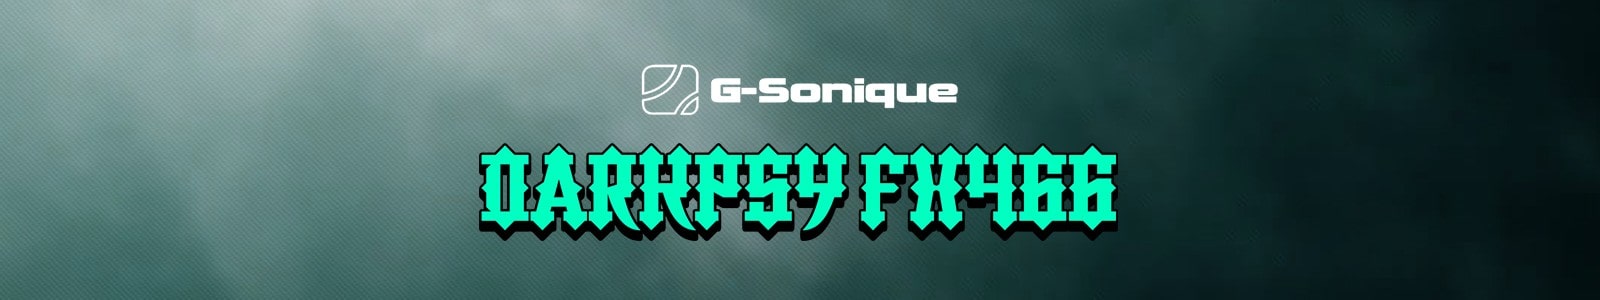 G-Sonique DarkPsy FX466